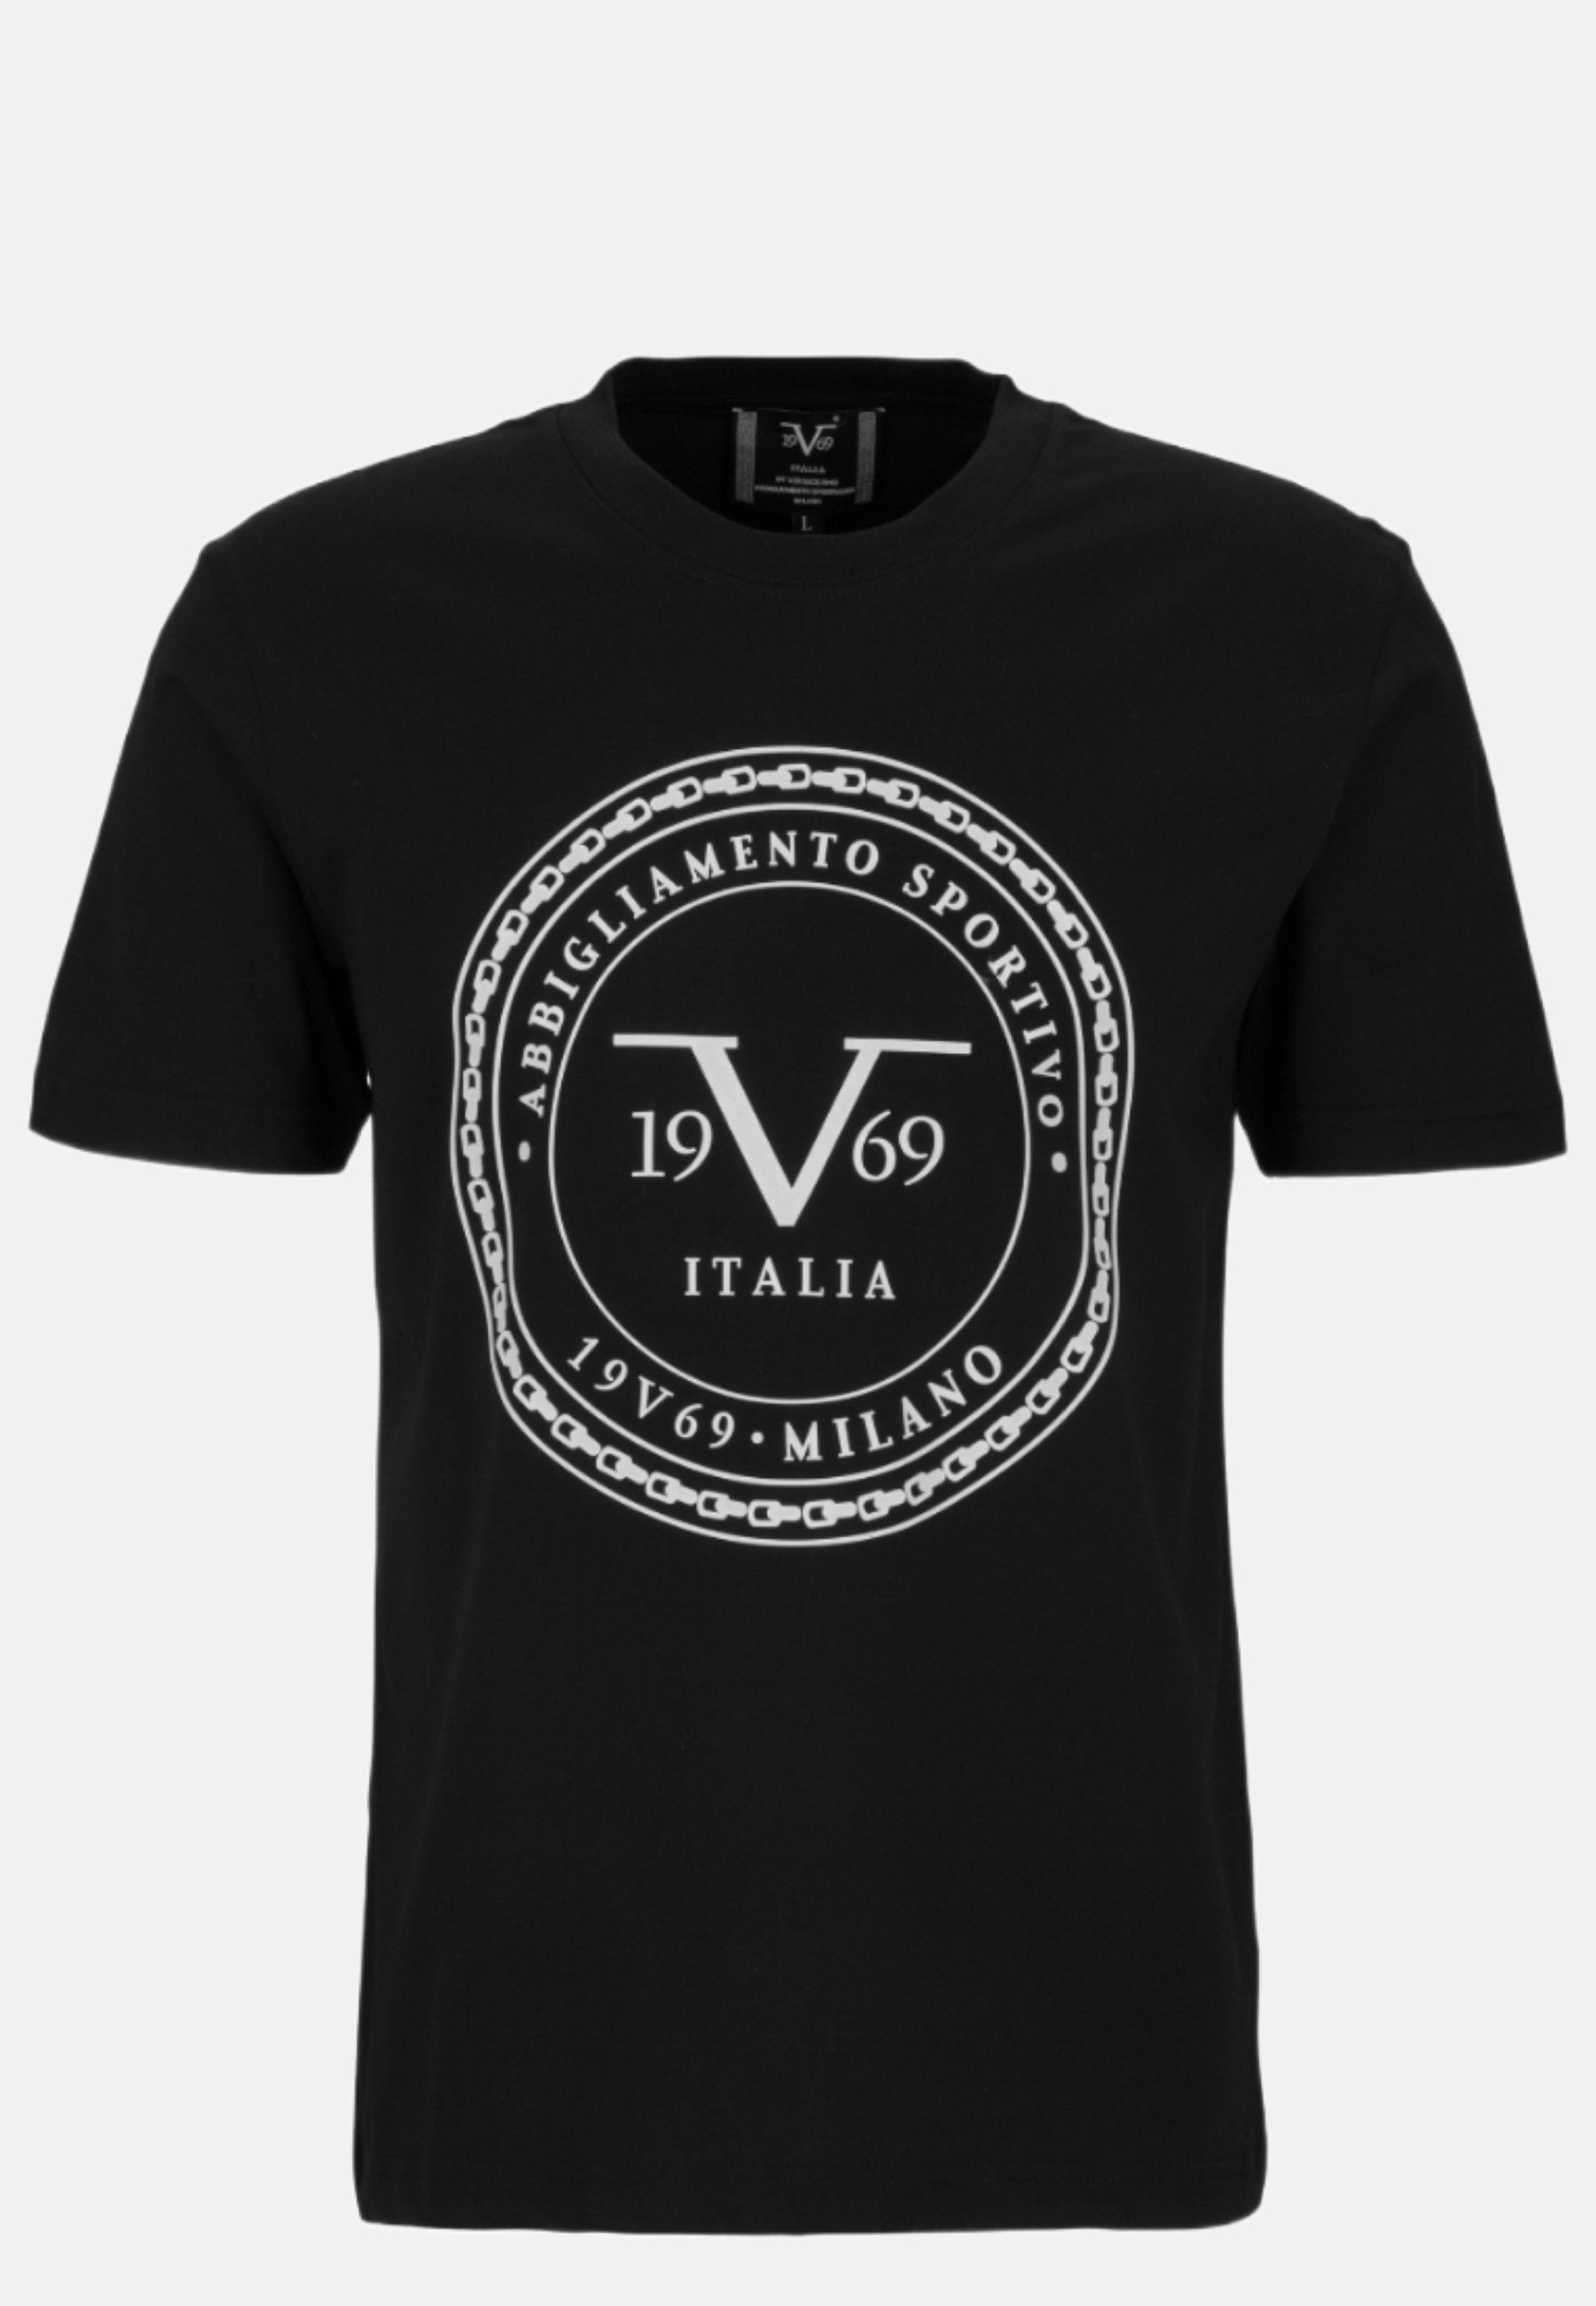 Felix T-Shirt Versace BLACK T-Shirt by Italia 19V69